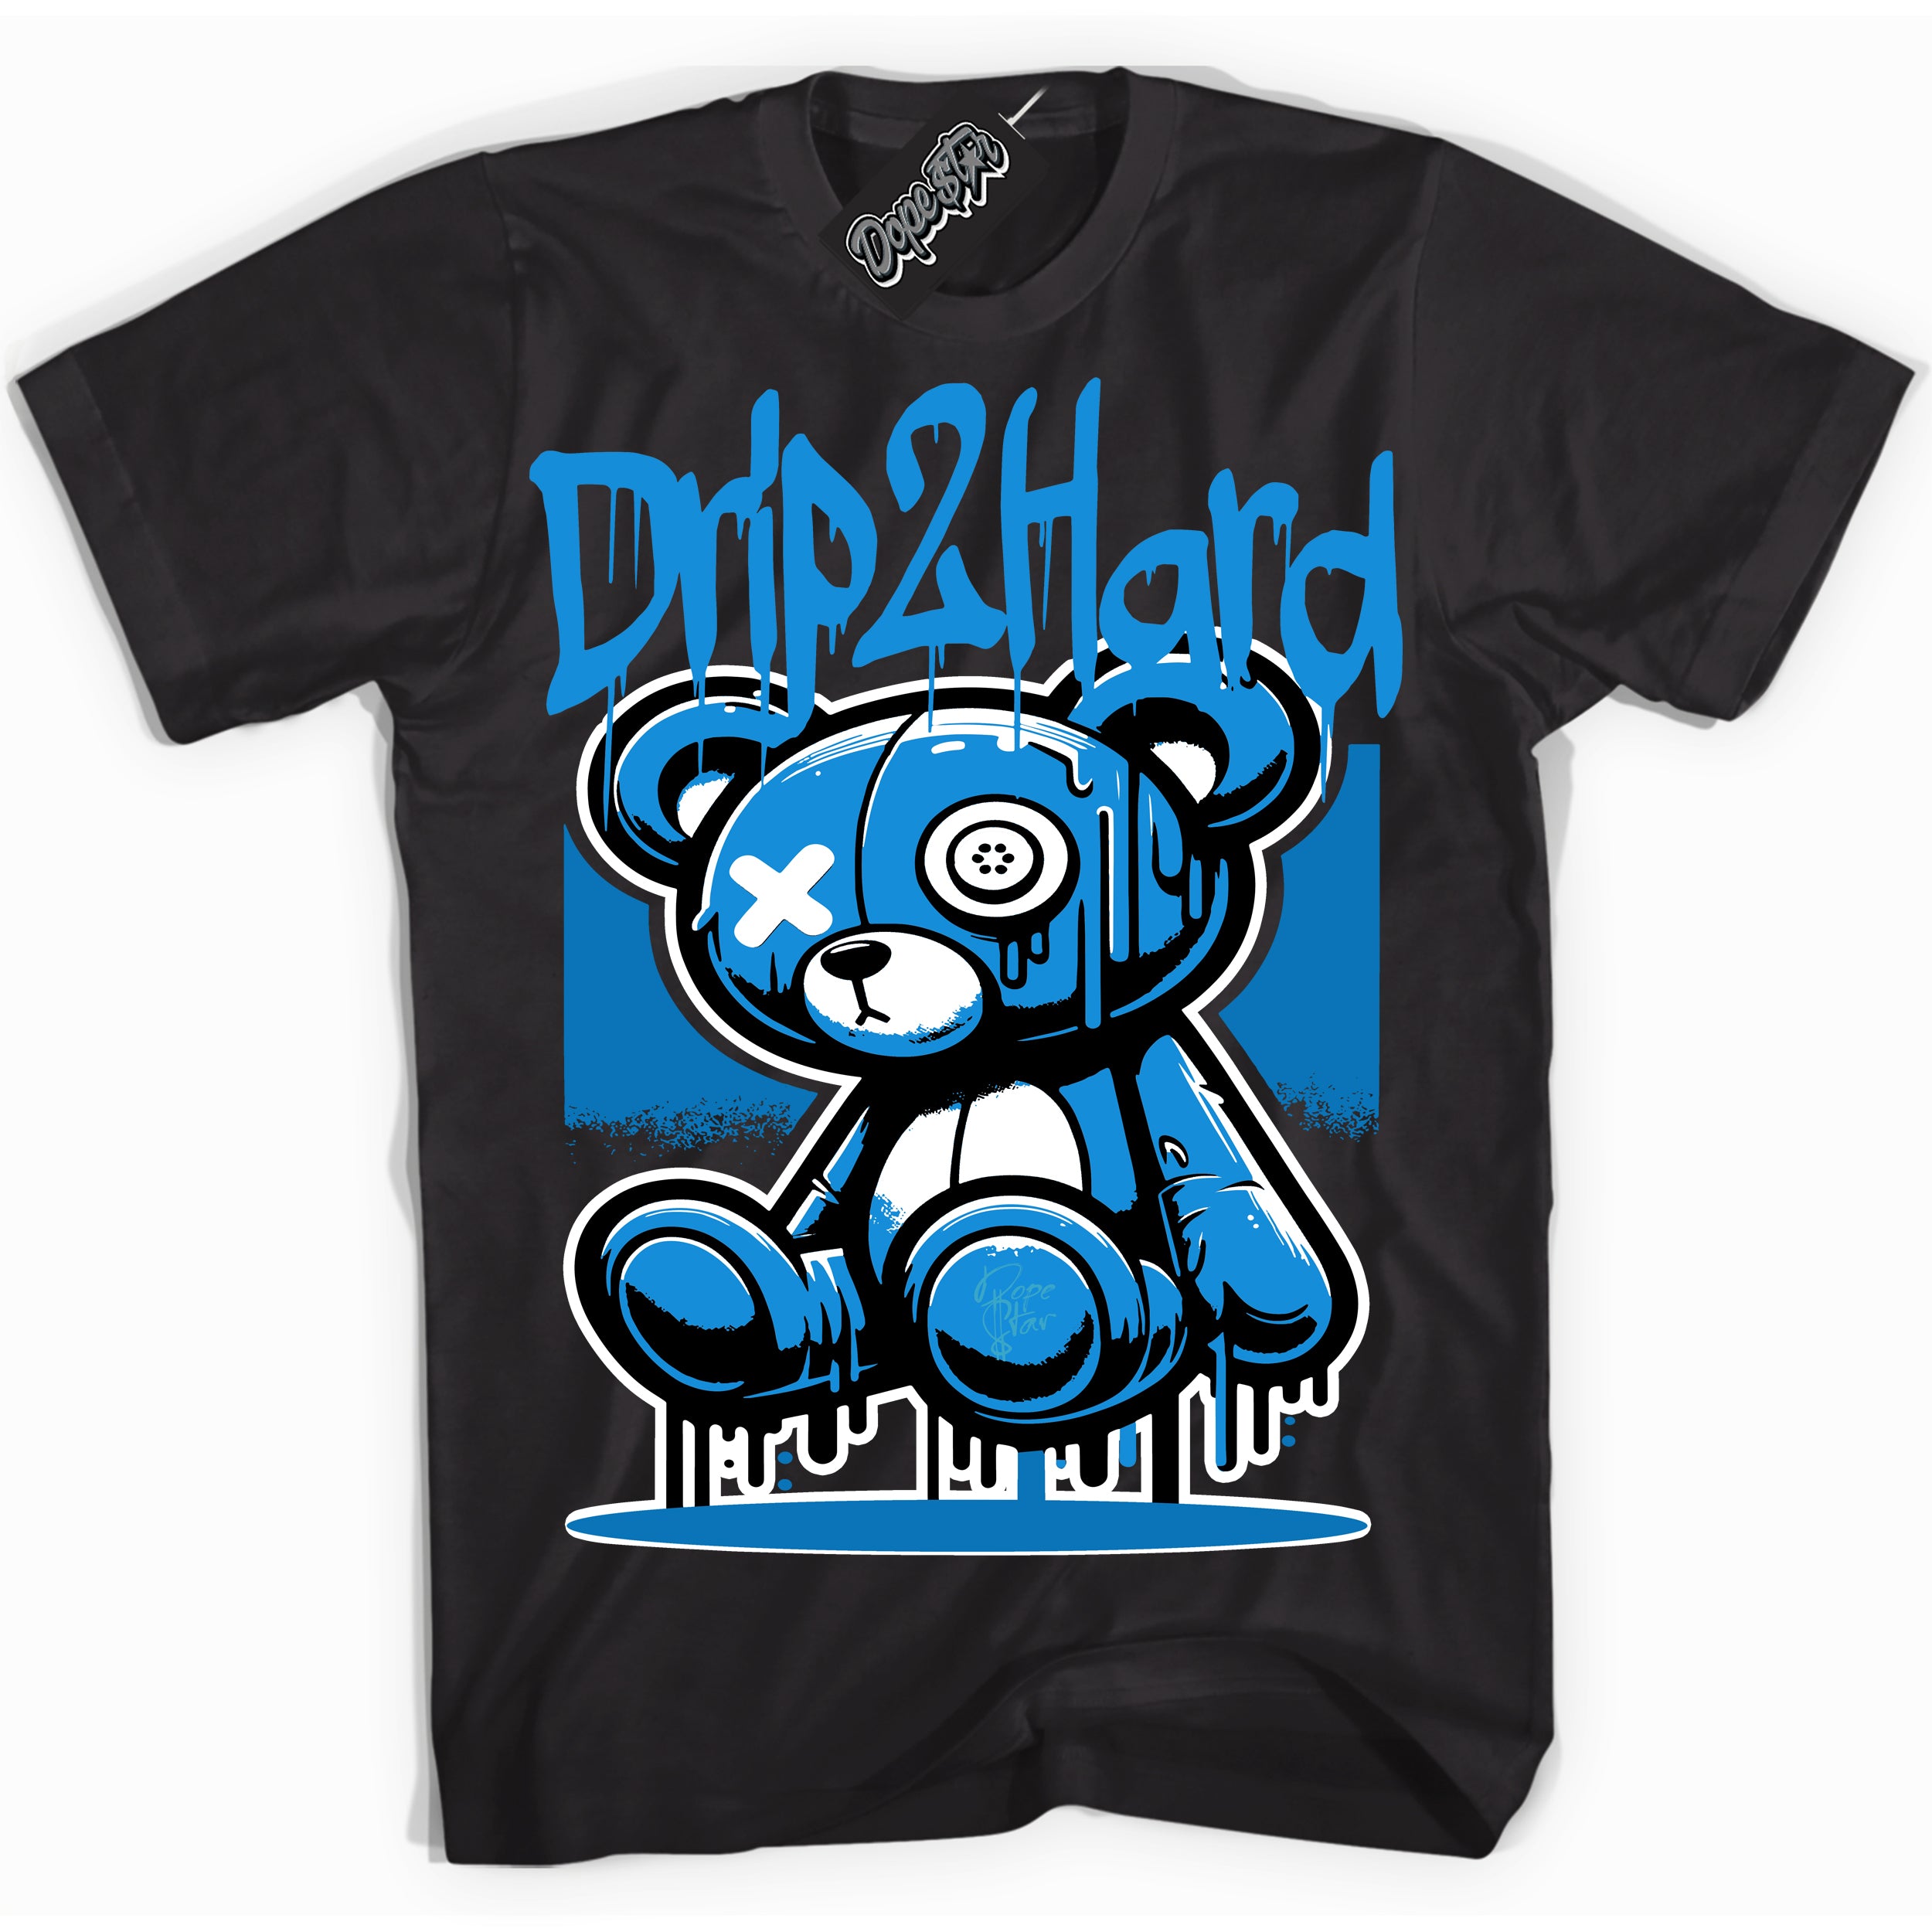 Powder Blue 9s DopeStar Shirt Drip 2 Hard Graphic